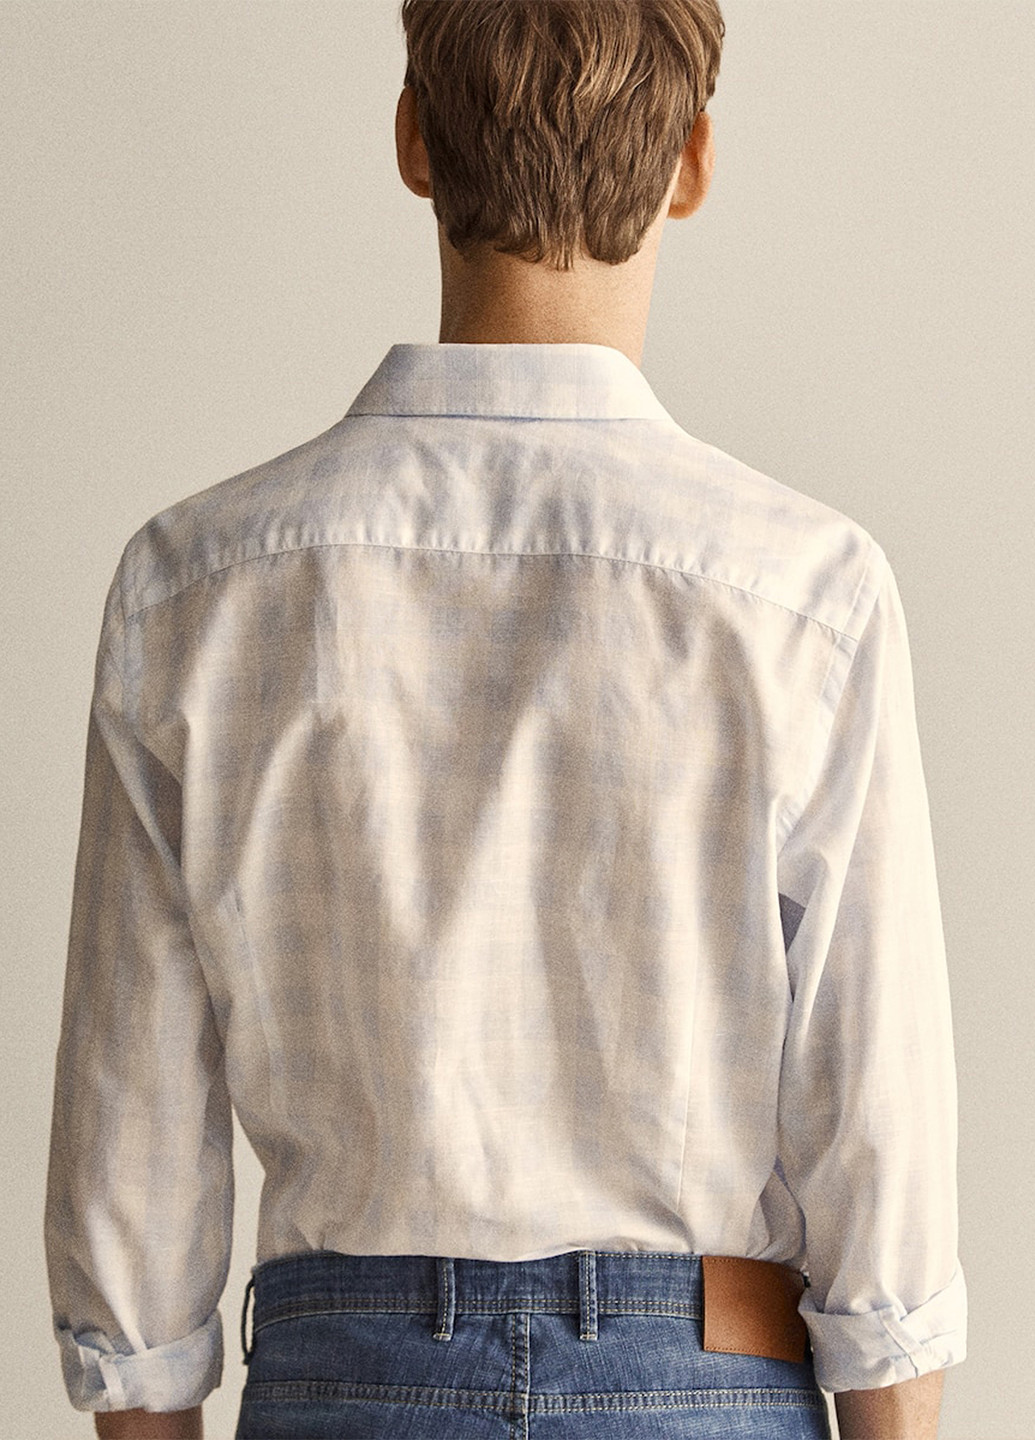 Белая кэжуал рубашка в клетку Massimo Dutti